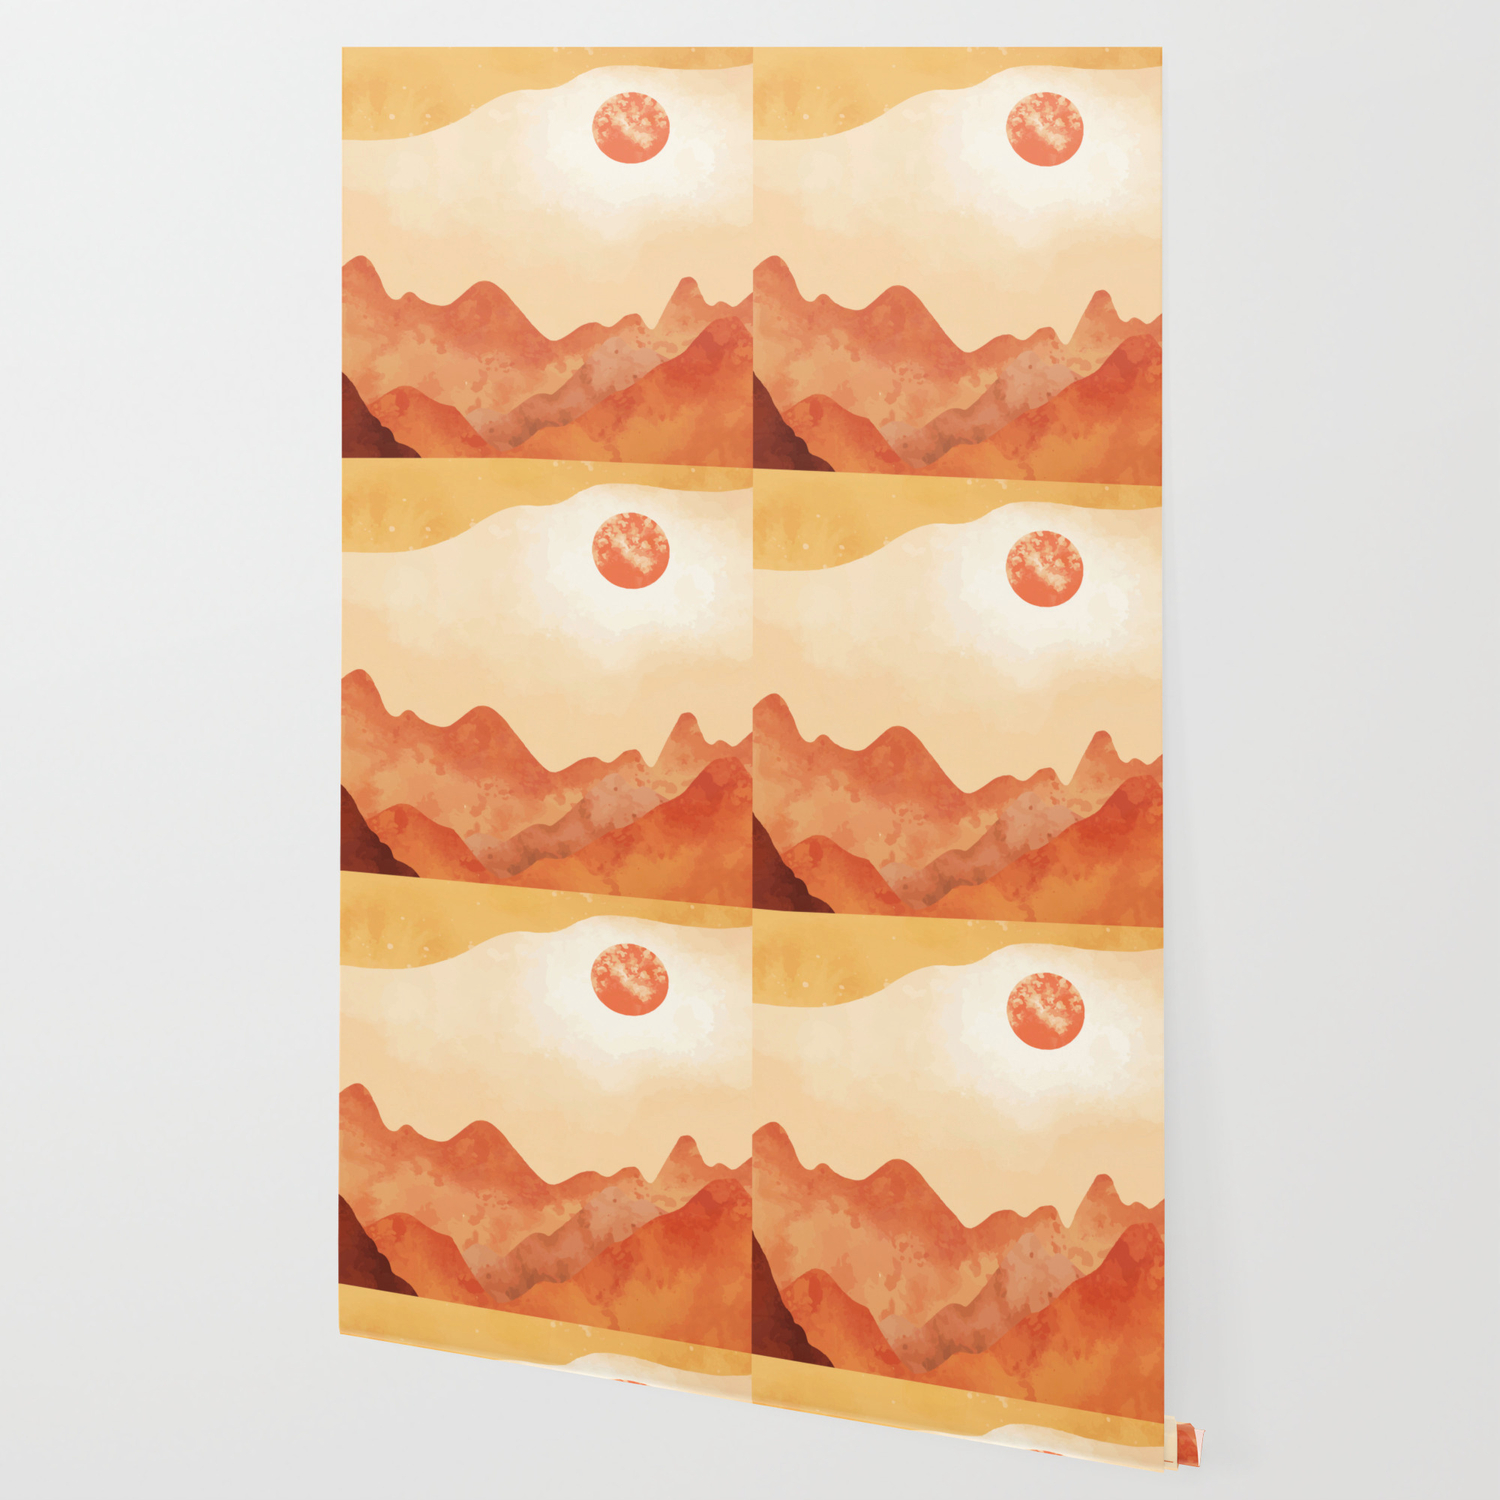 Desert Sun Day Minimalism Wallpapers